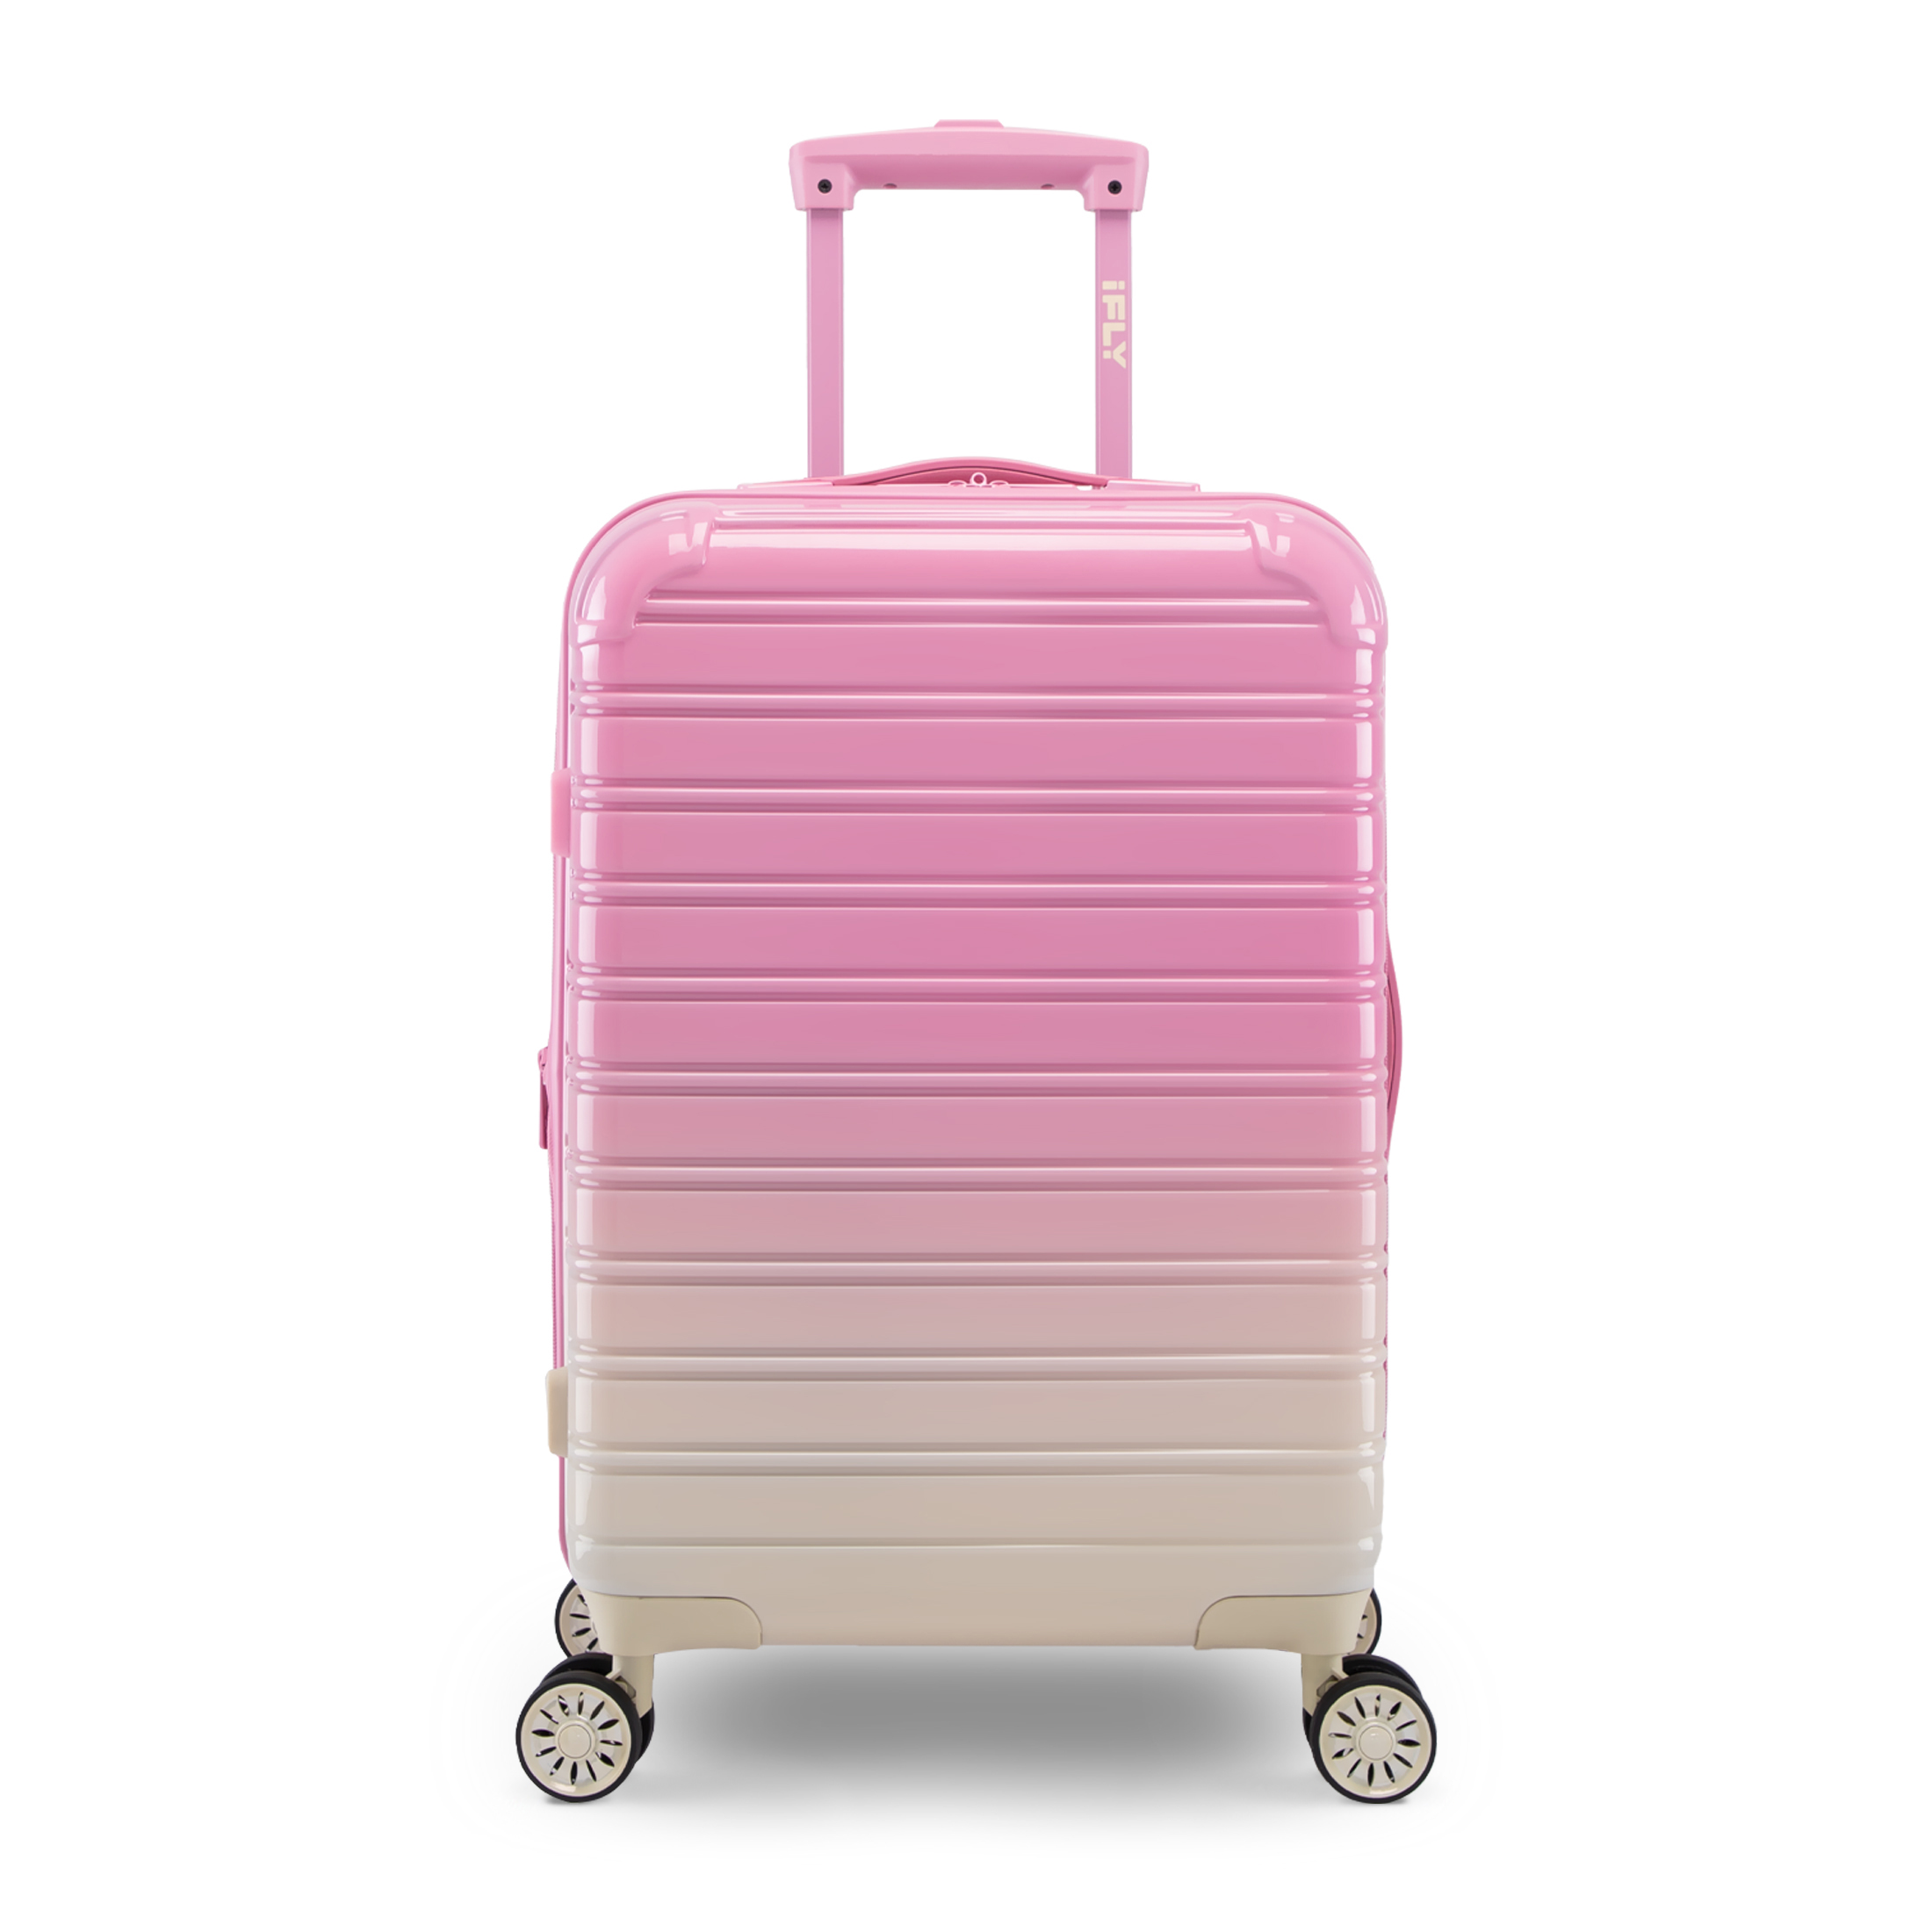 iFLY Hardside Fibertech Carry-on Luggage 20", Strawberry Lemonade - image 1 of 8